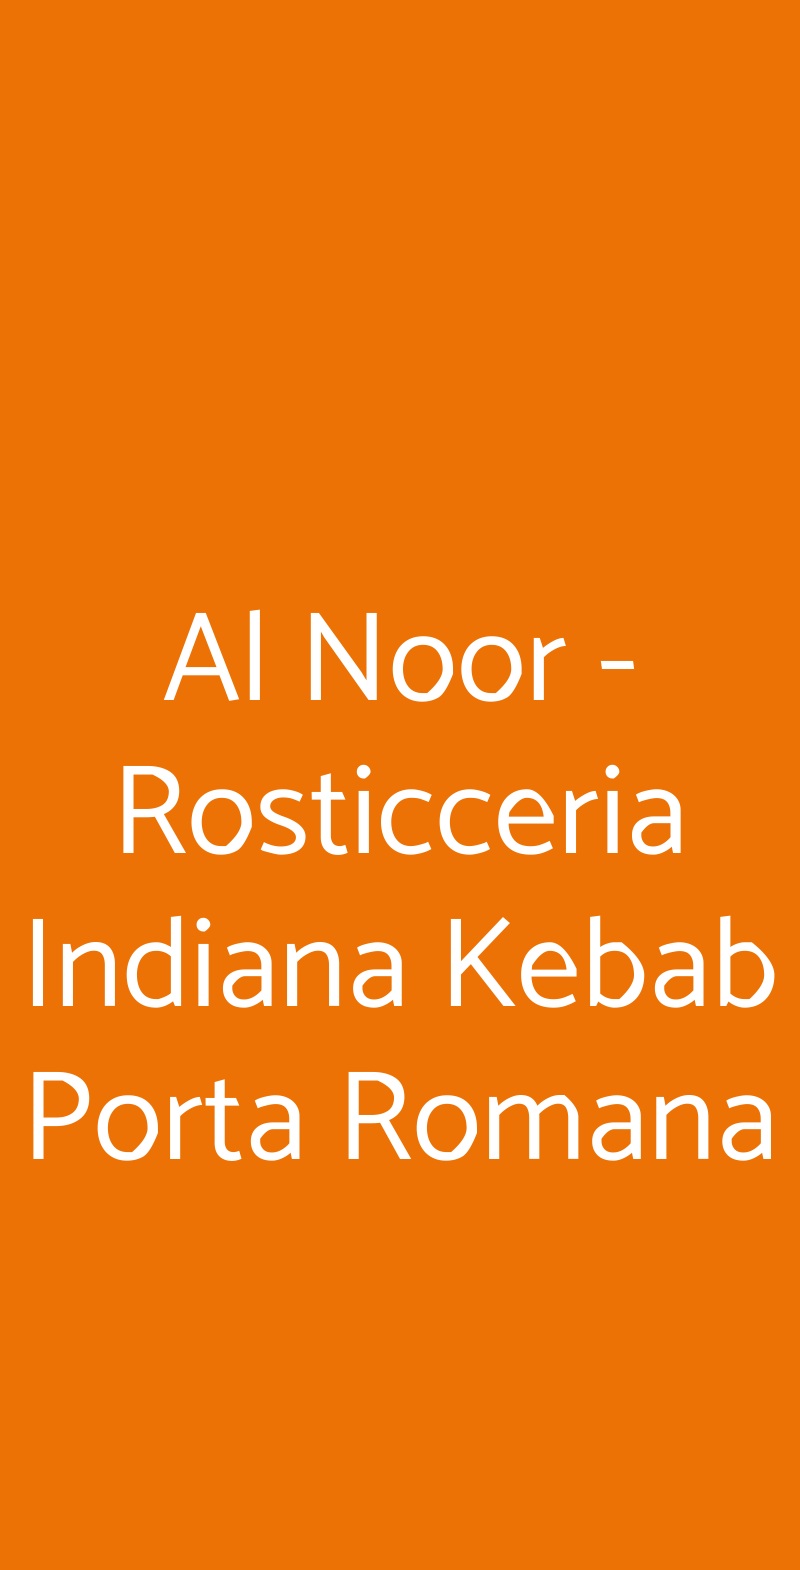 Al Noor - Rosticceria Indiana Kebab Porta Romana Milano menù 1 pagina